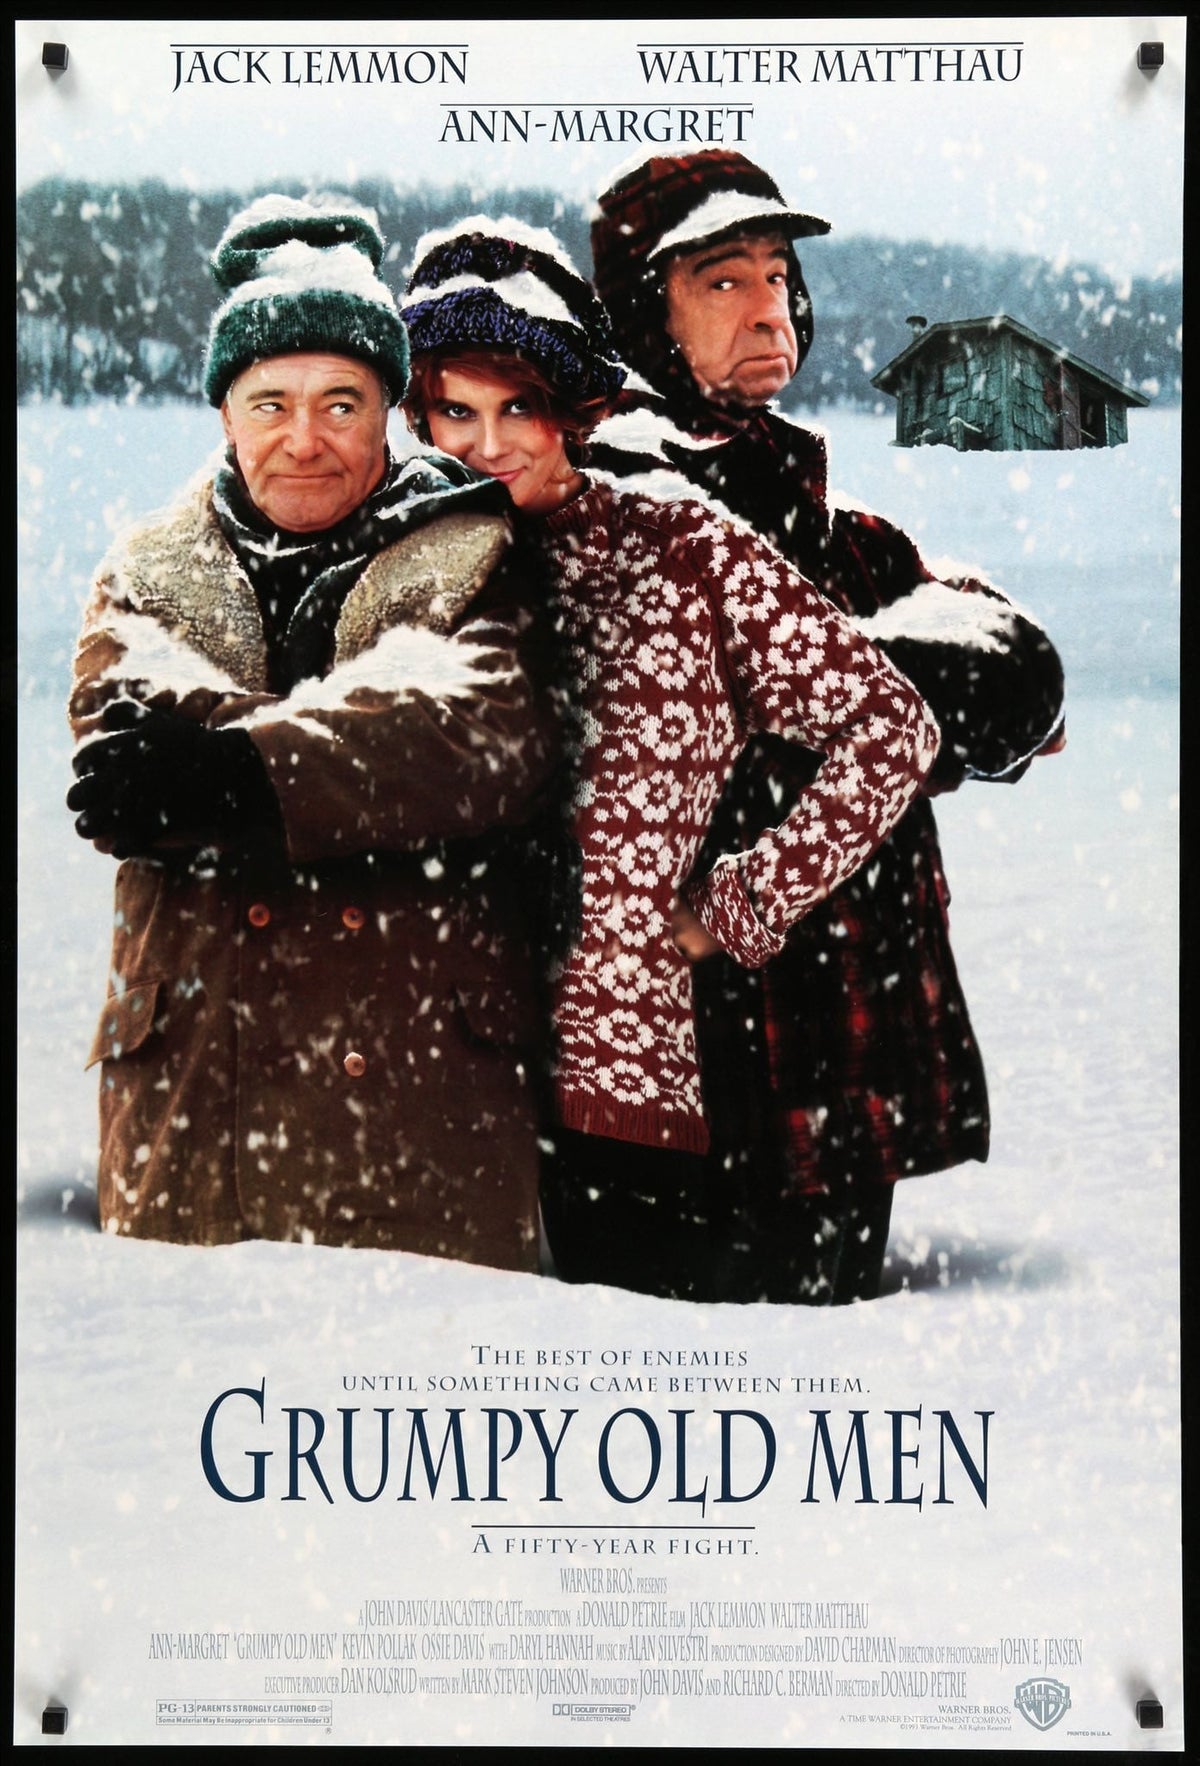 Grumpy Old Men (1993) original movie poster for sale at Original Film Art